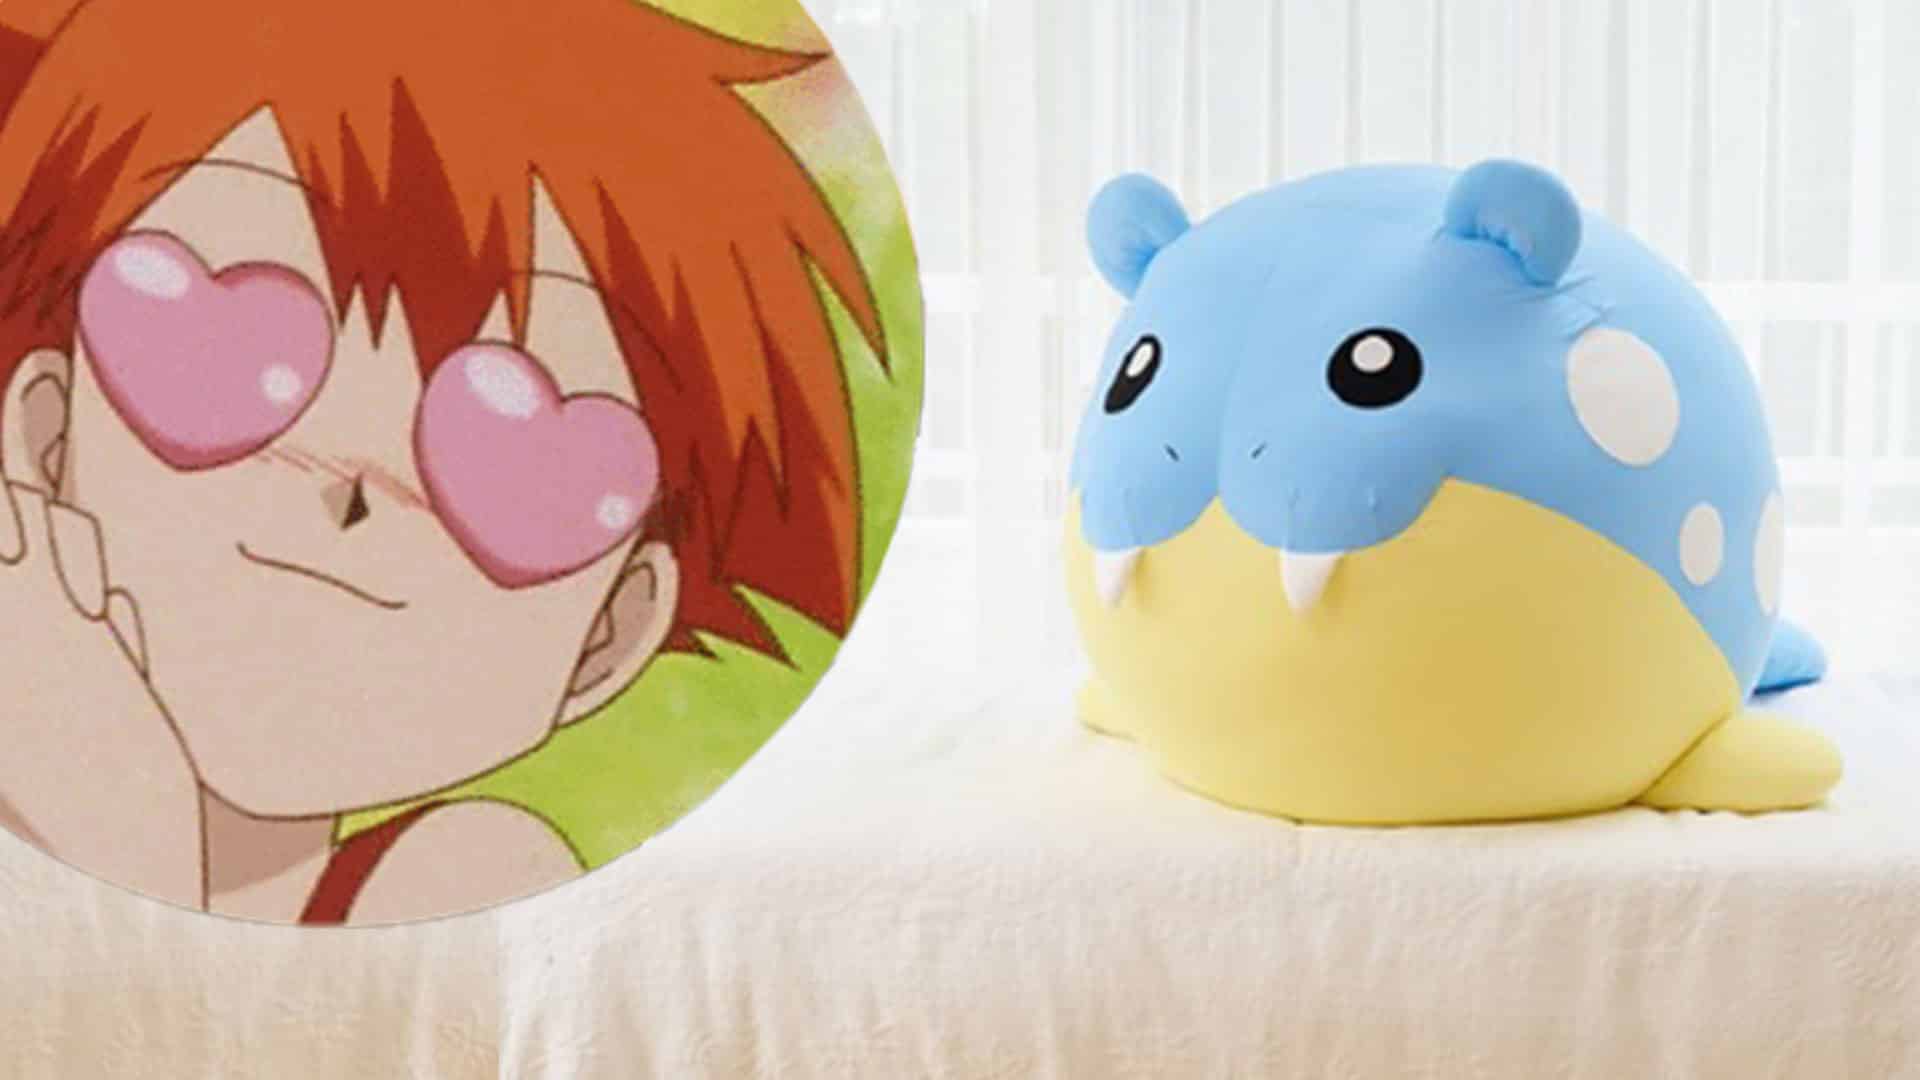 Pokémon Center sells cute plush Pokémon for 350 euros - I still want it